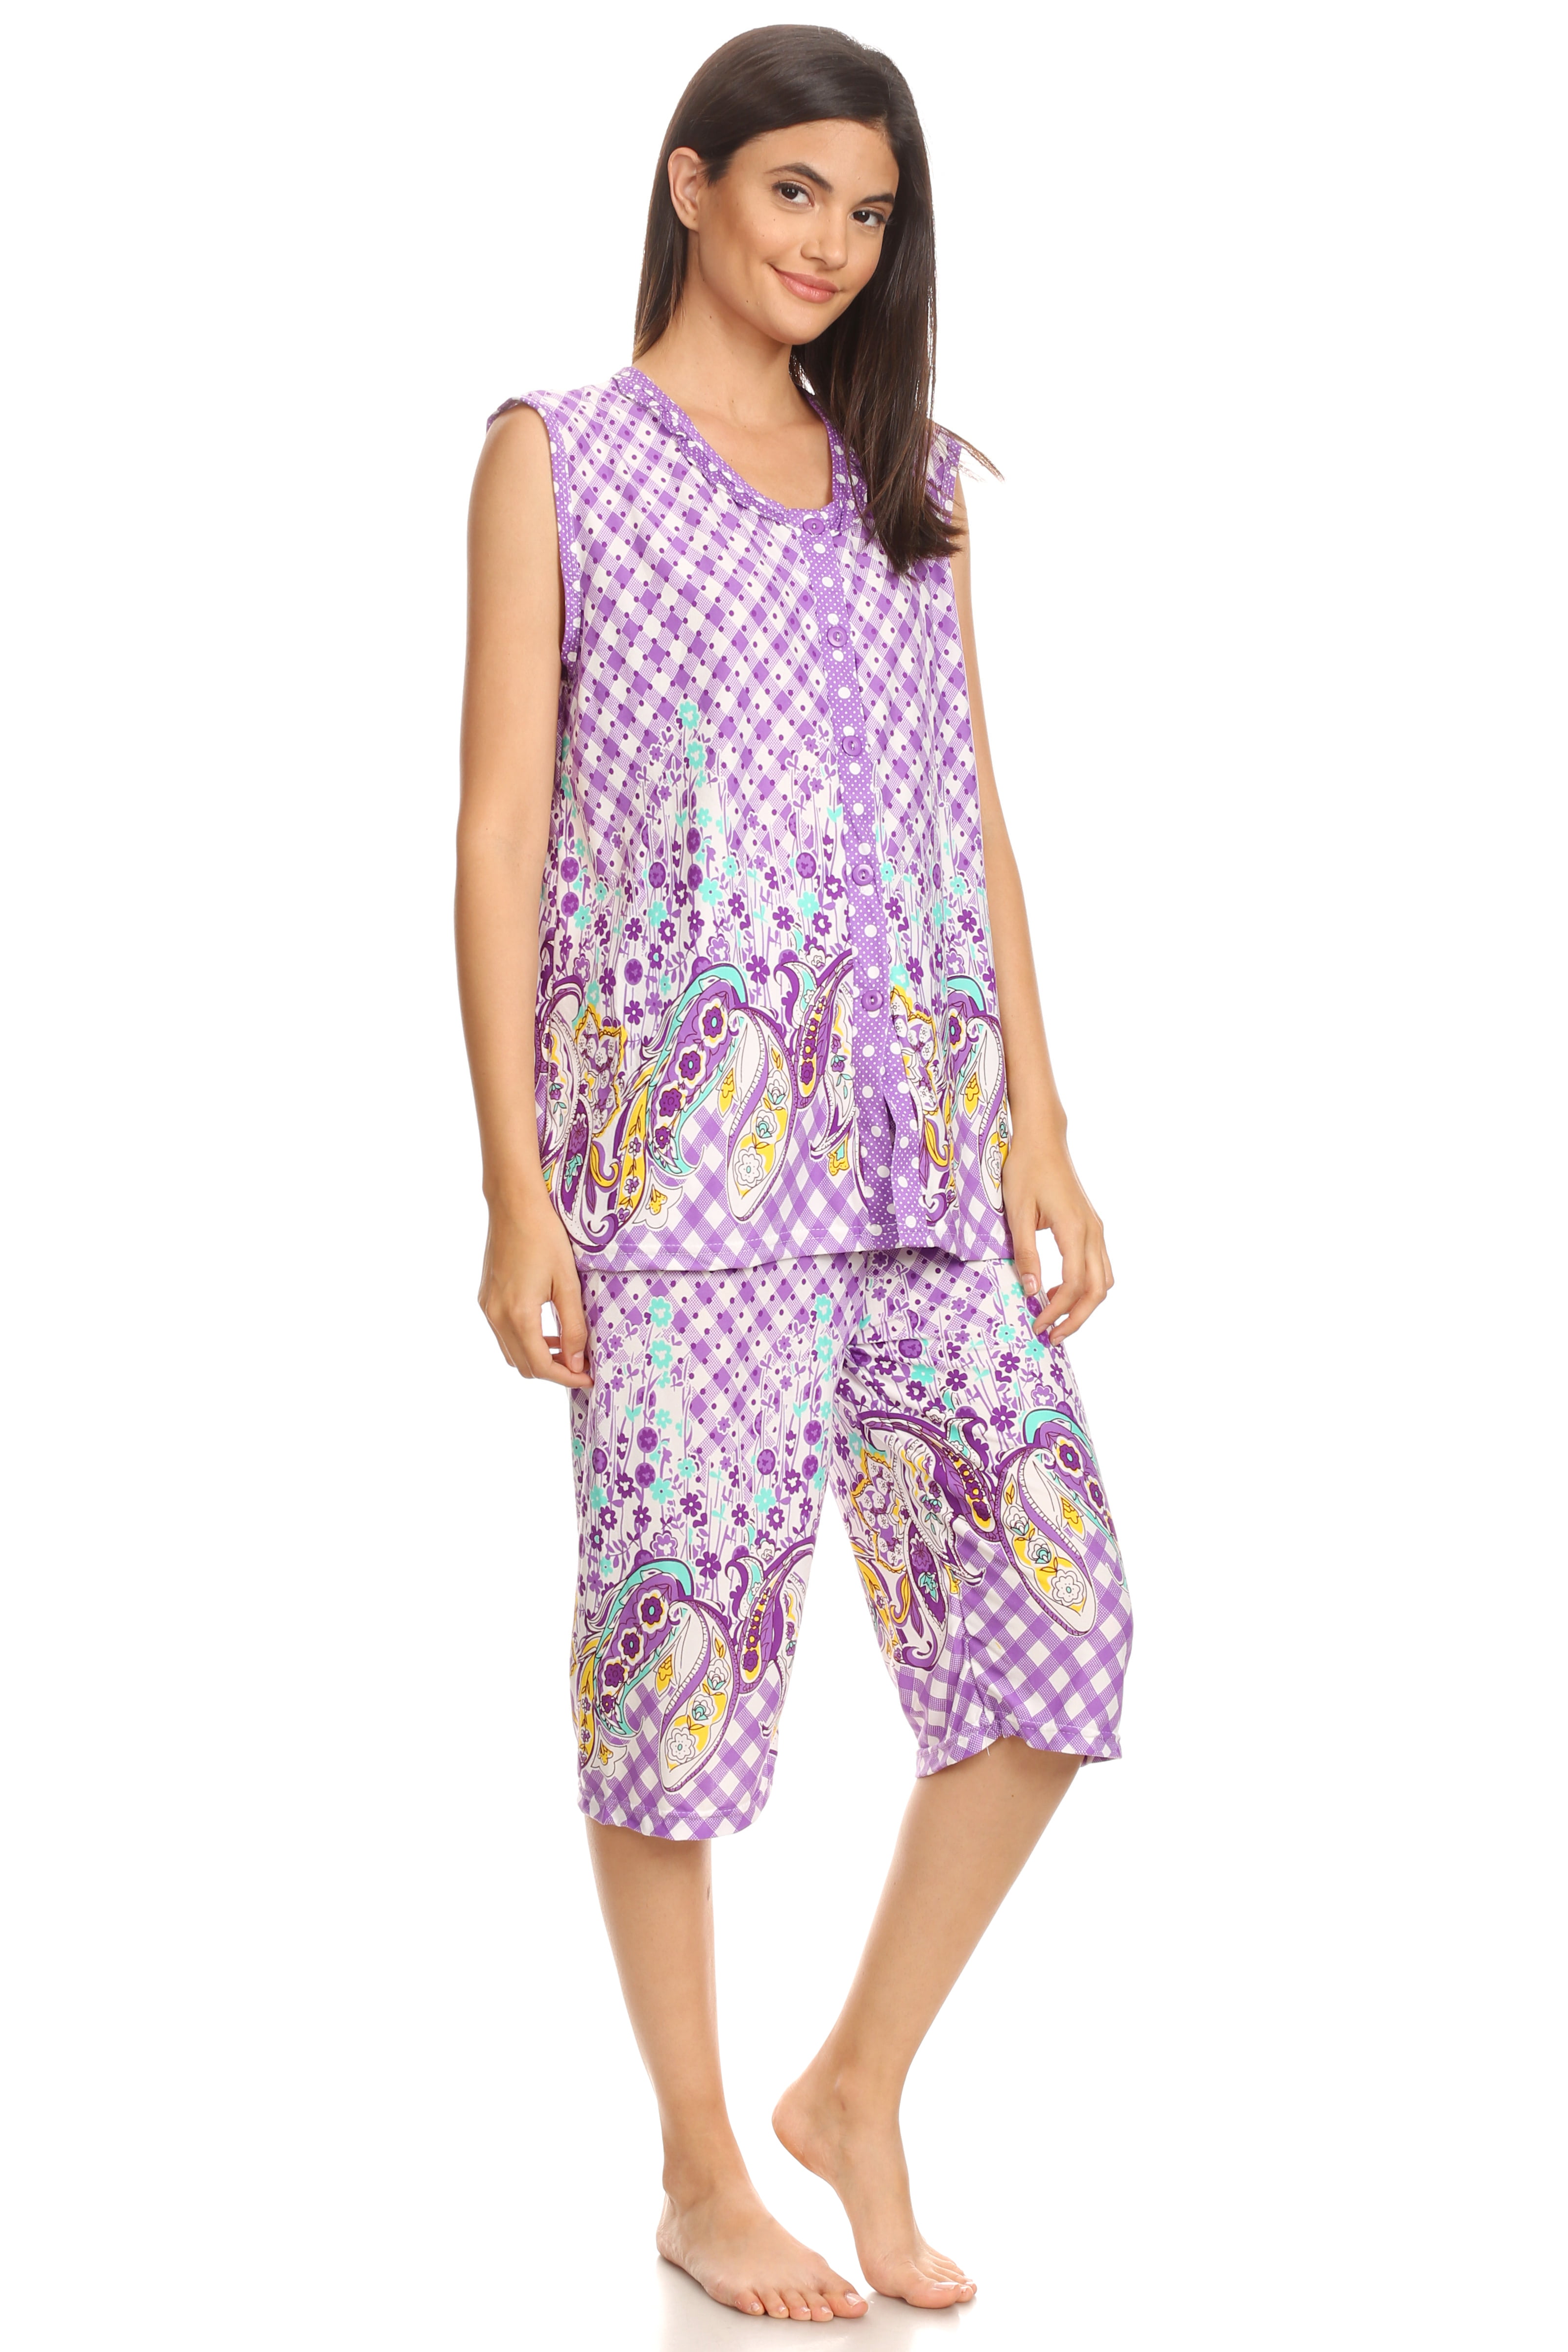 Premiere Fashion 15026c Womens Capri Set Sleepwear Cotton Pajamas 